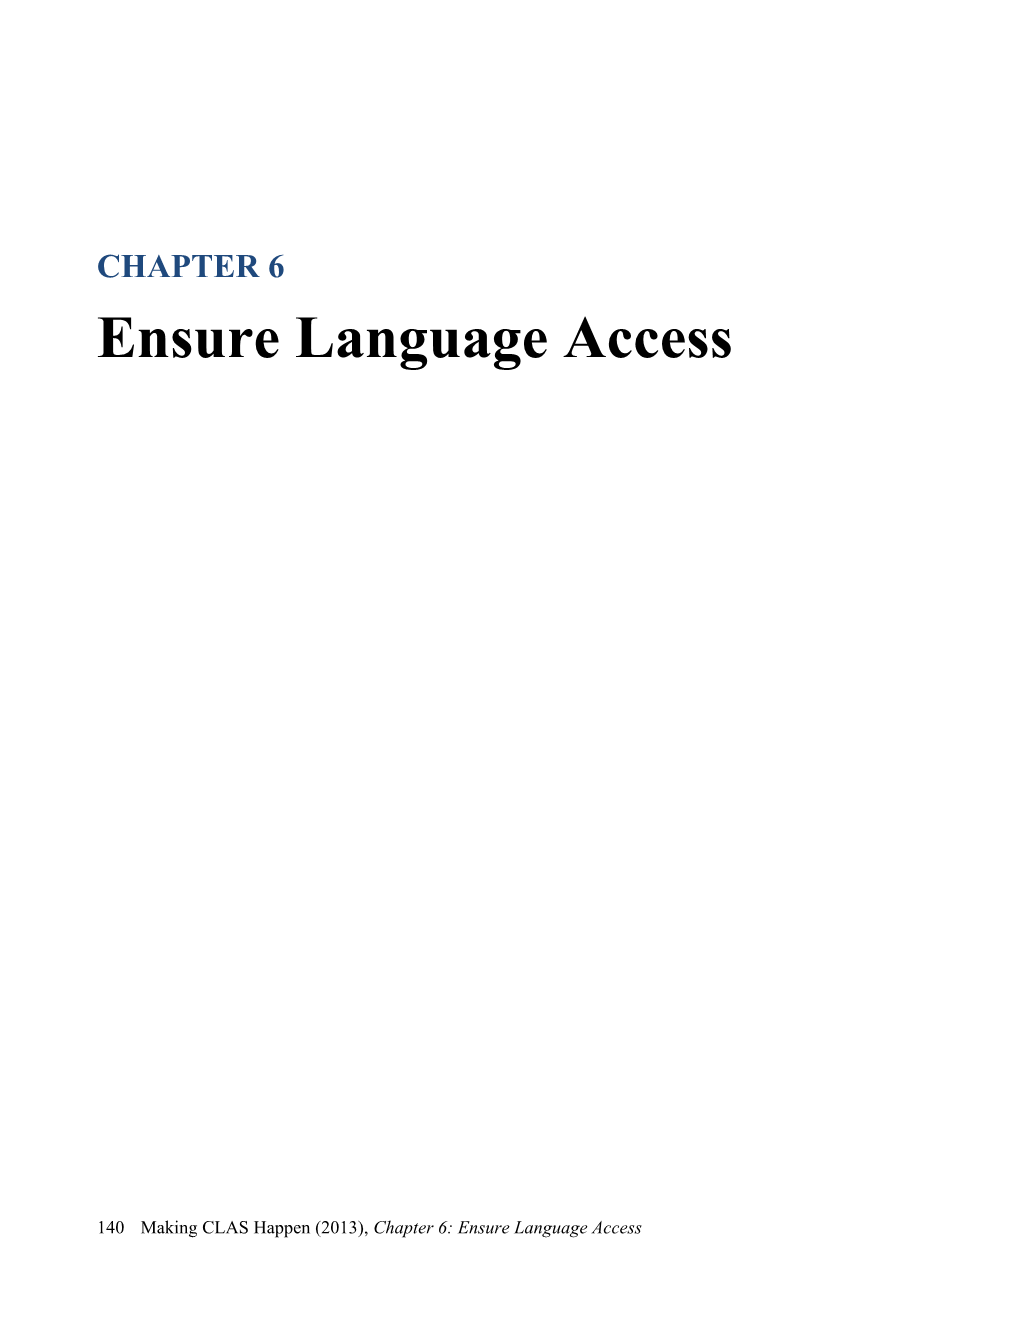 Ensure Language Access